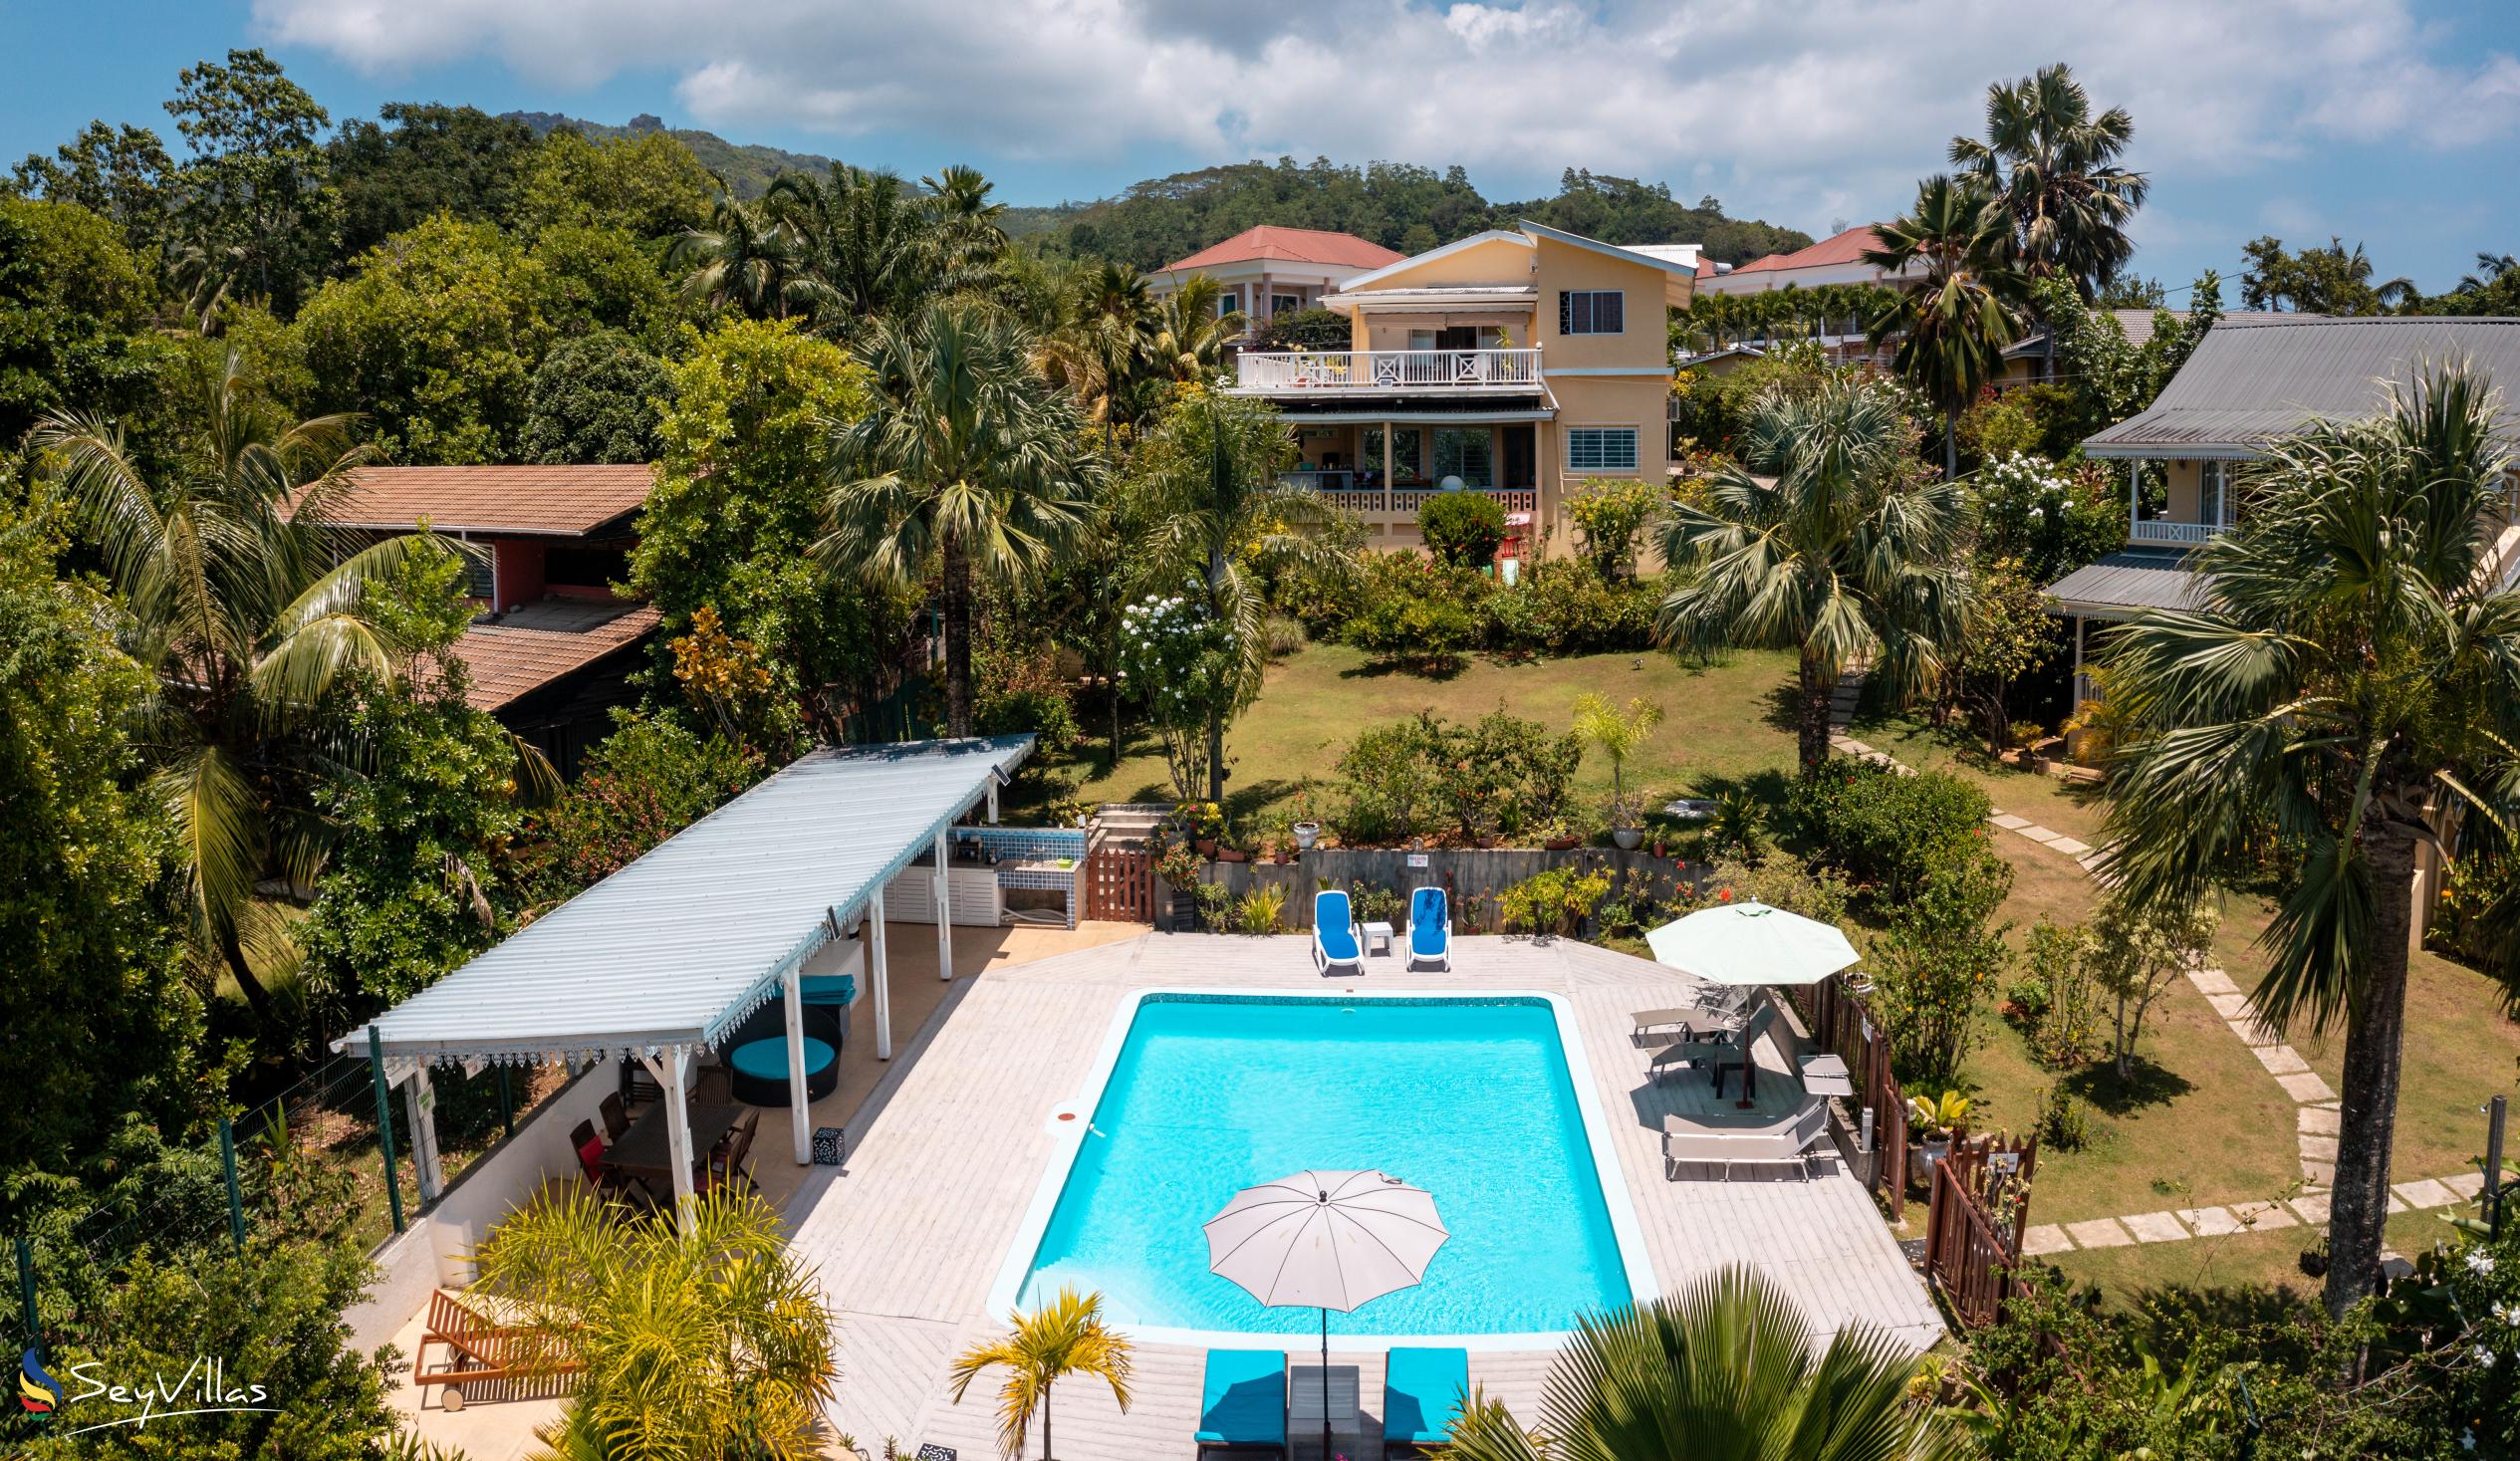 Photo 2: Residence Monte Cristo - Outdoor area - Mahé (Seychelles)